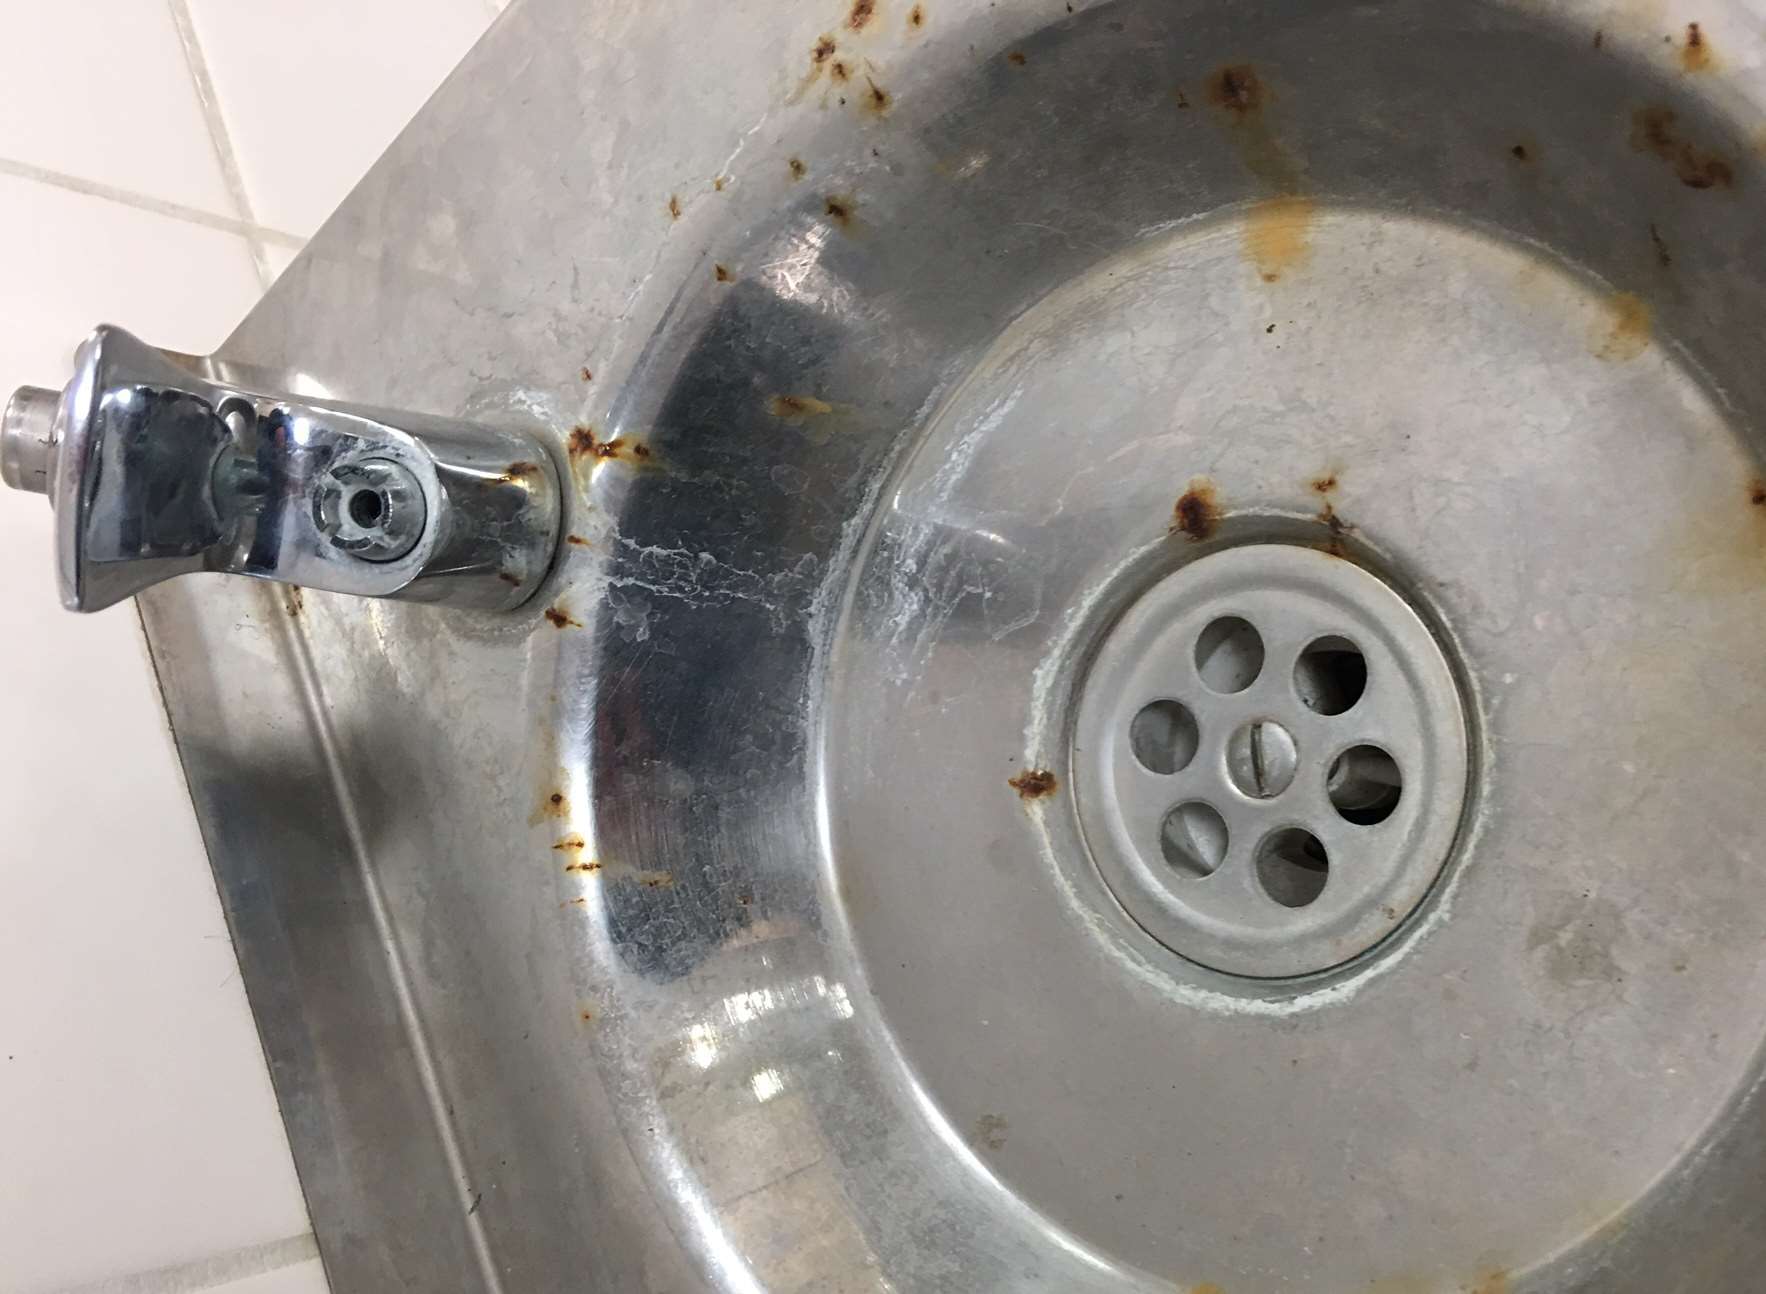 Filthy sink